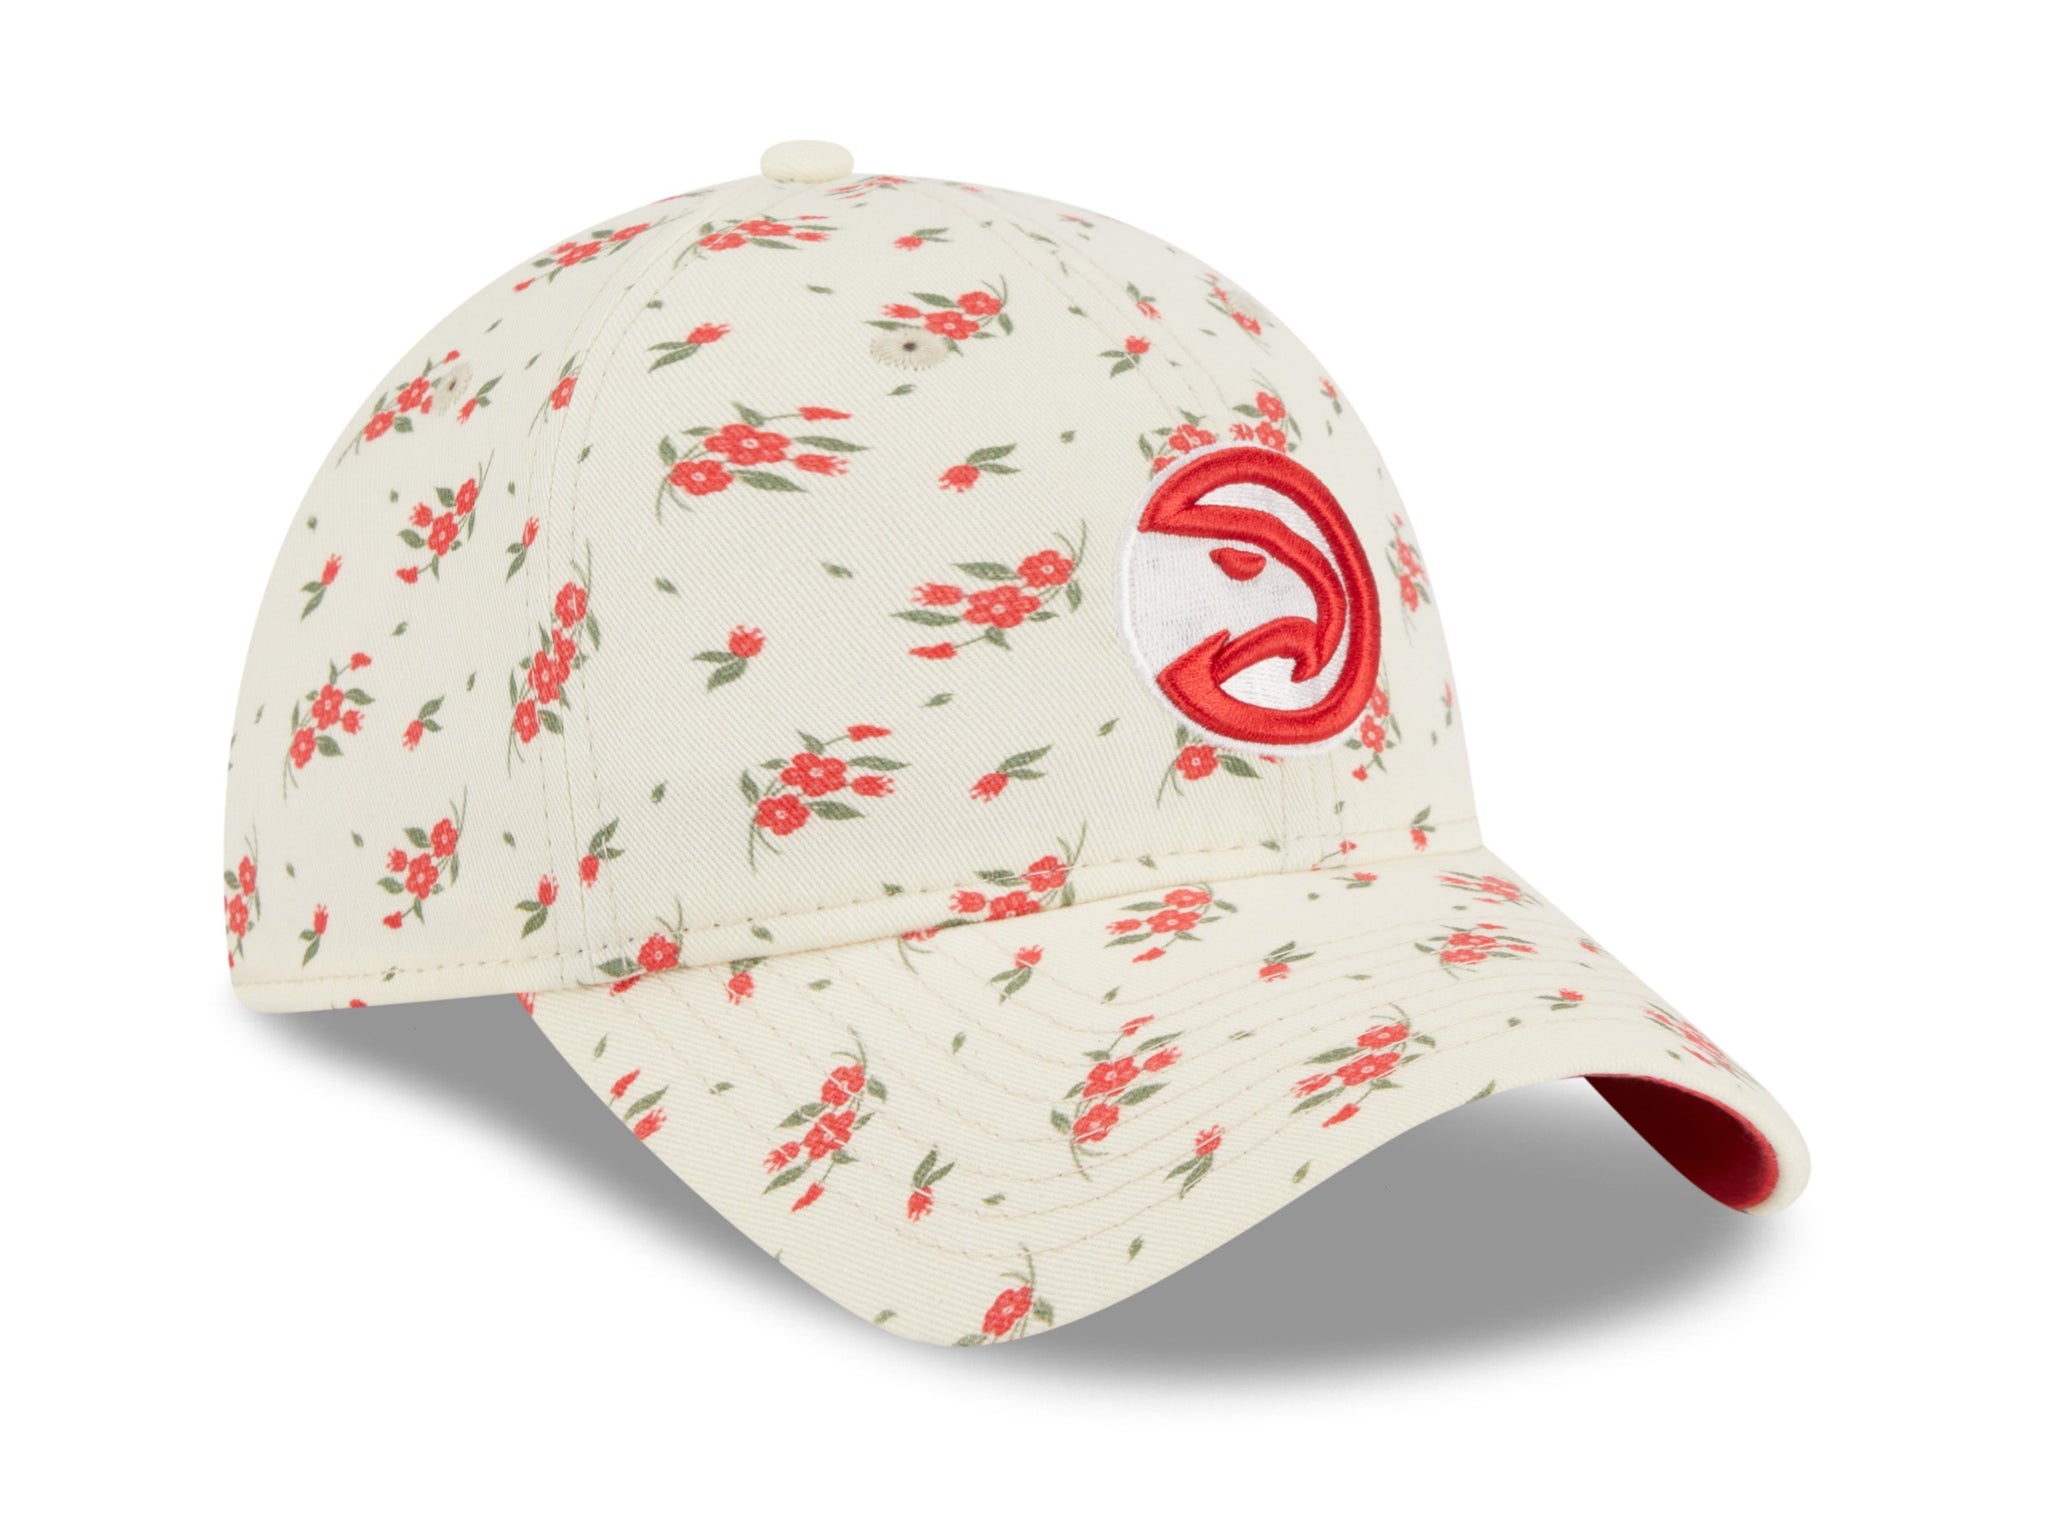 Chicago Cubs City Connect 9TWENTY New Era Adjustable Hat